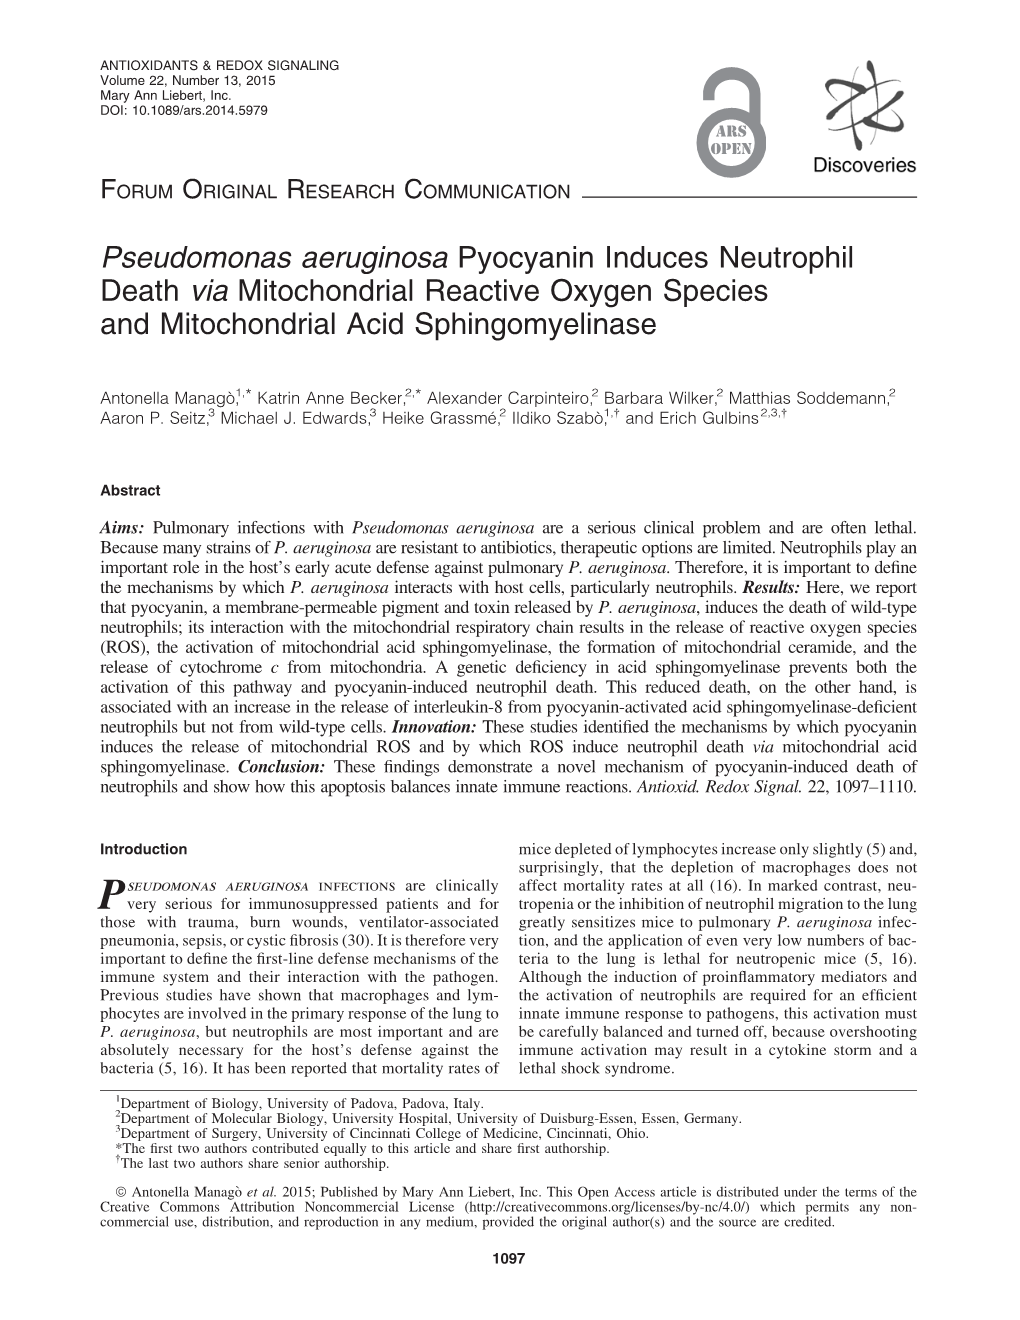 Pseudomonas Aeruginosa Pyocyanin Induces Neutrophil Death Via Mitochondrial Reactive Oxygen Species and Mitochondrial Acid Sphingomyelinase